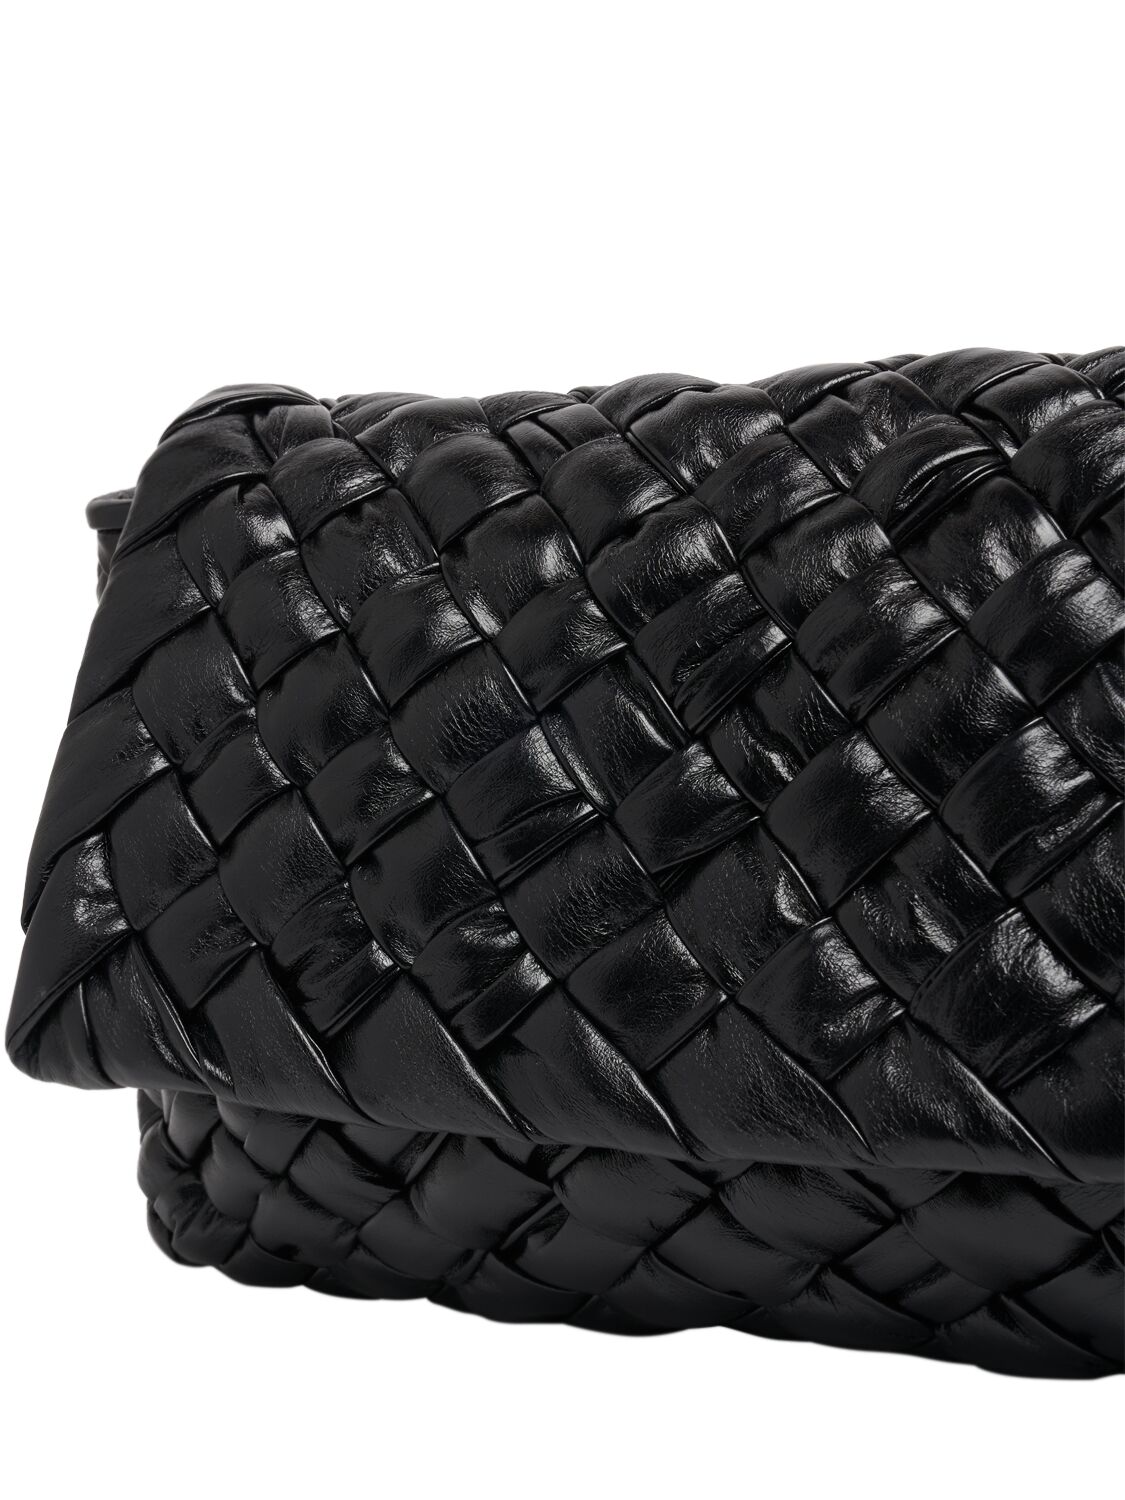 Shop Bottega Veneta Rumple Leather Messenger Bag In Black